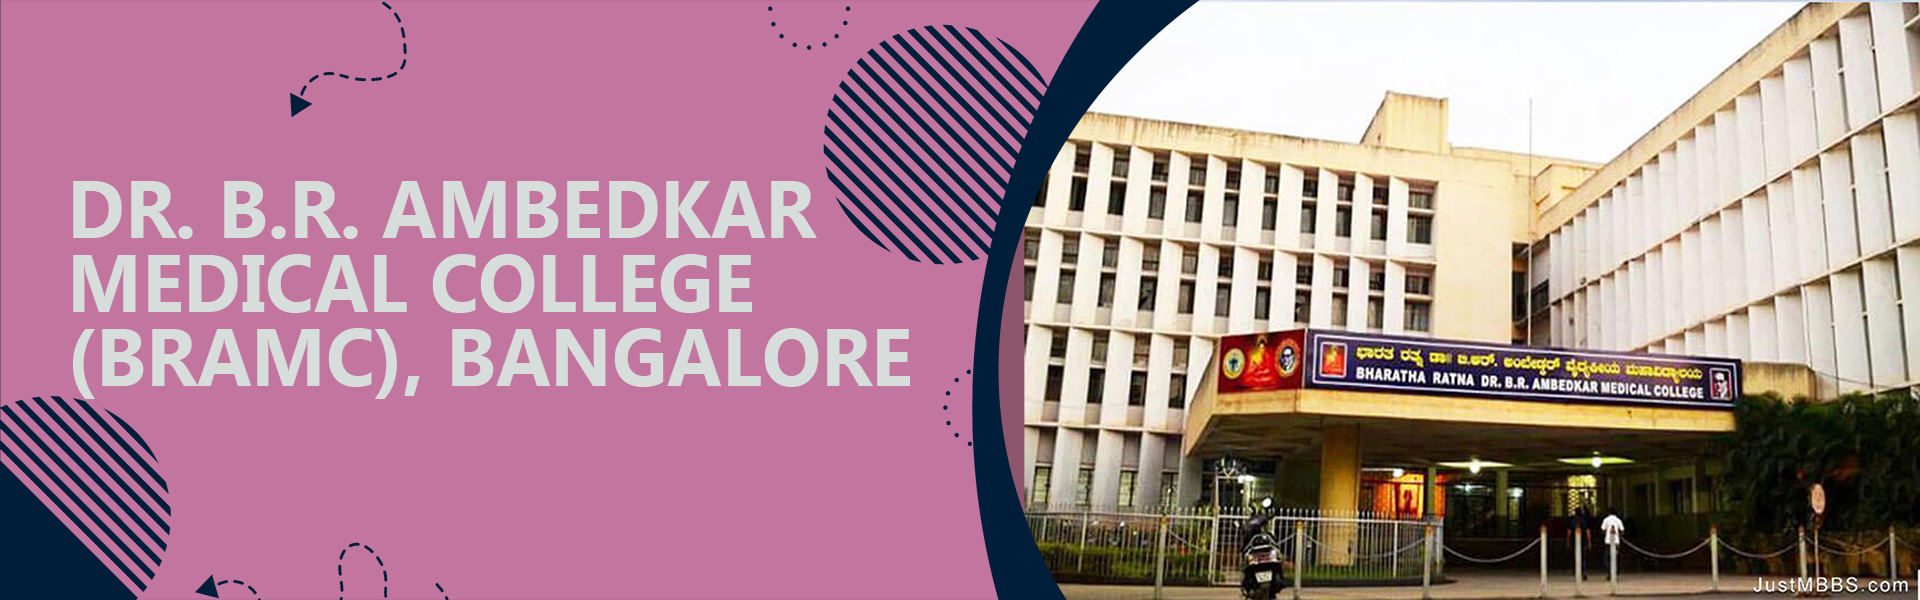 Dr. B.R. Ambedkar Medical College - (BRAMC), Bangalore